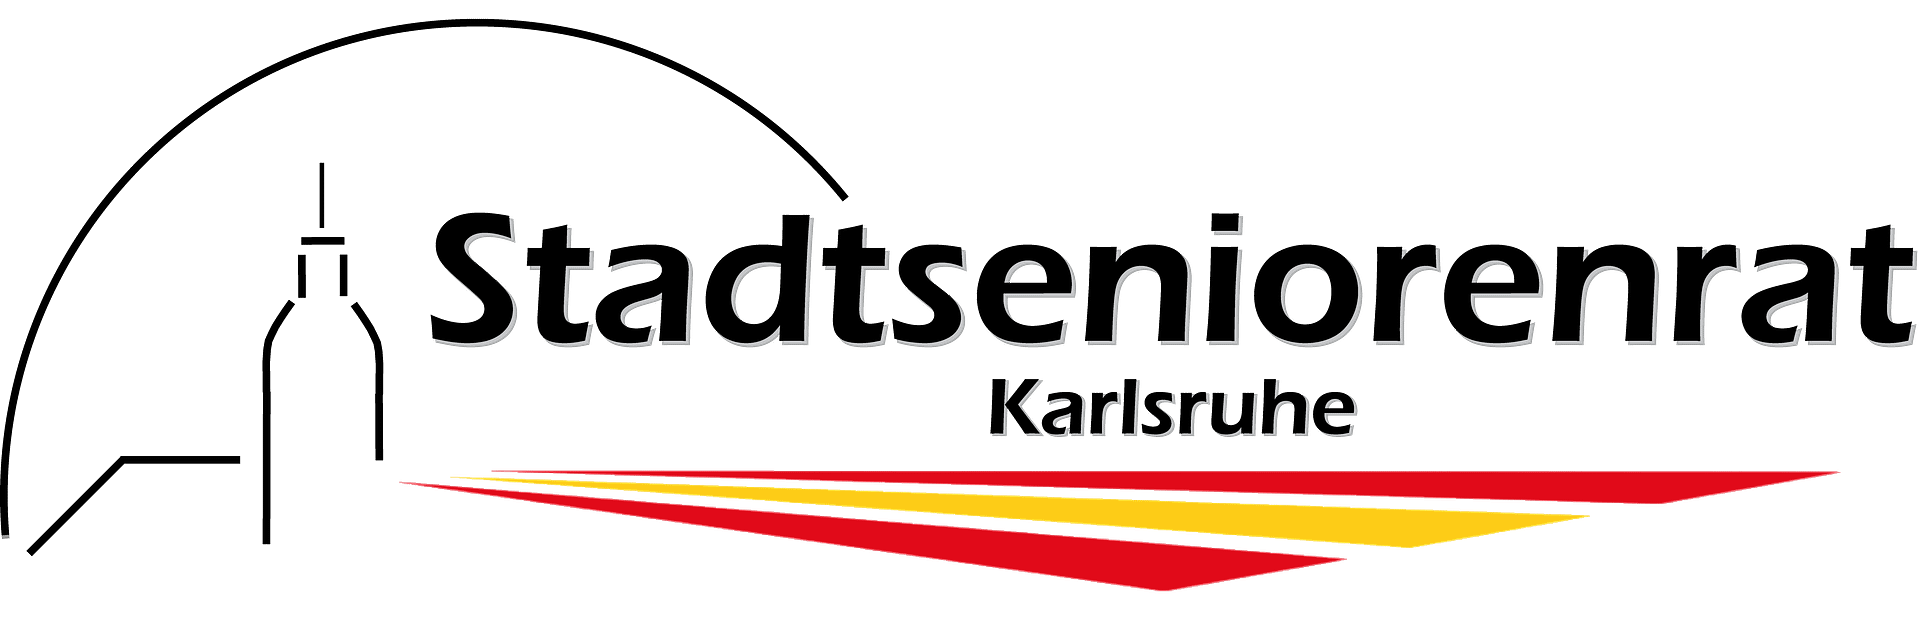 Stadtseniorenrat Karlsruhe e.V.